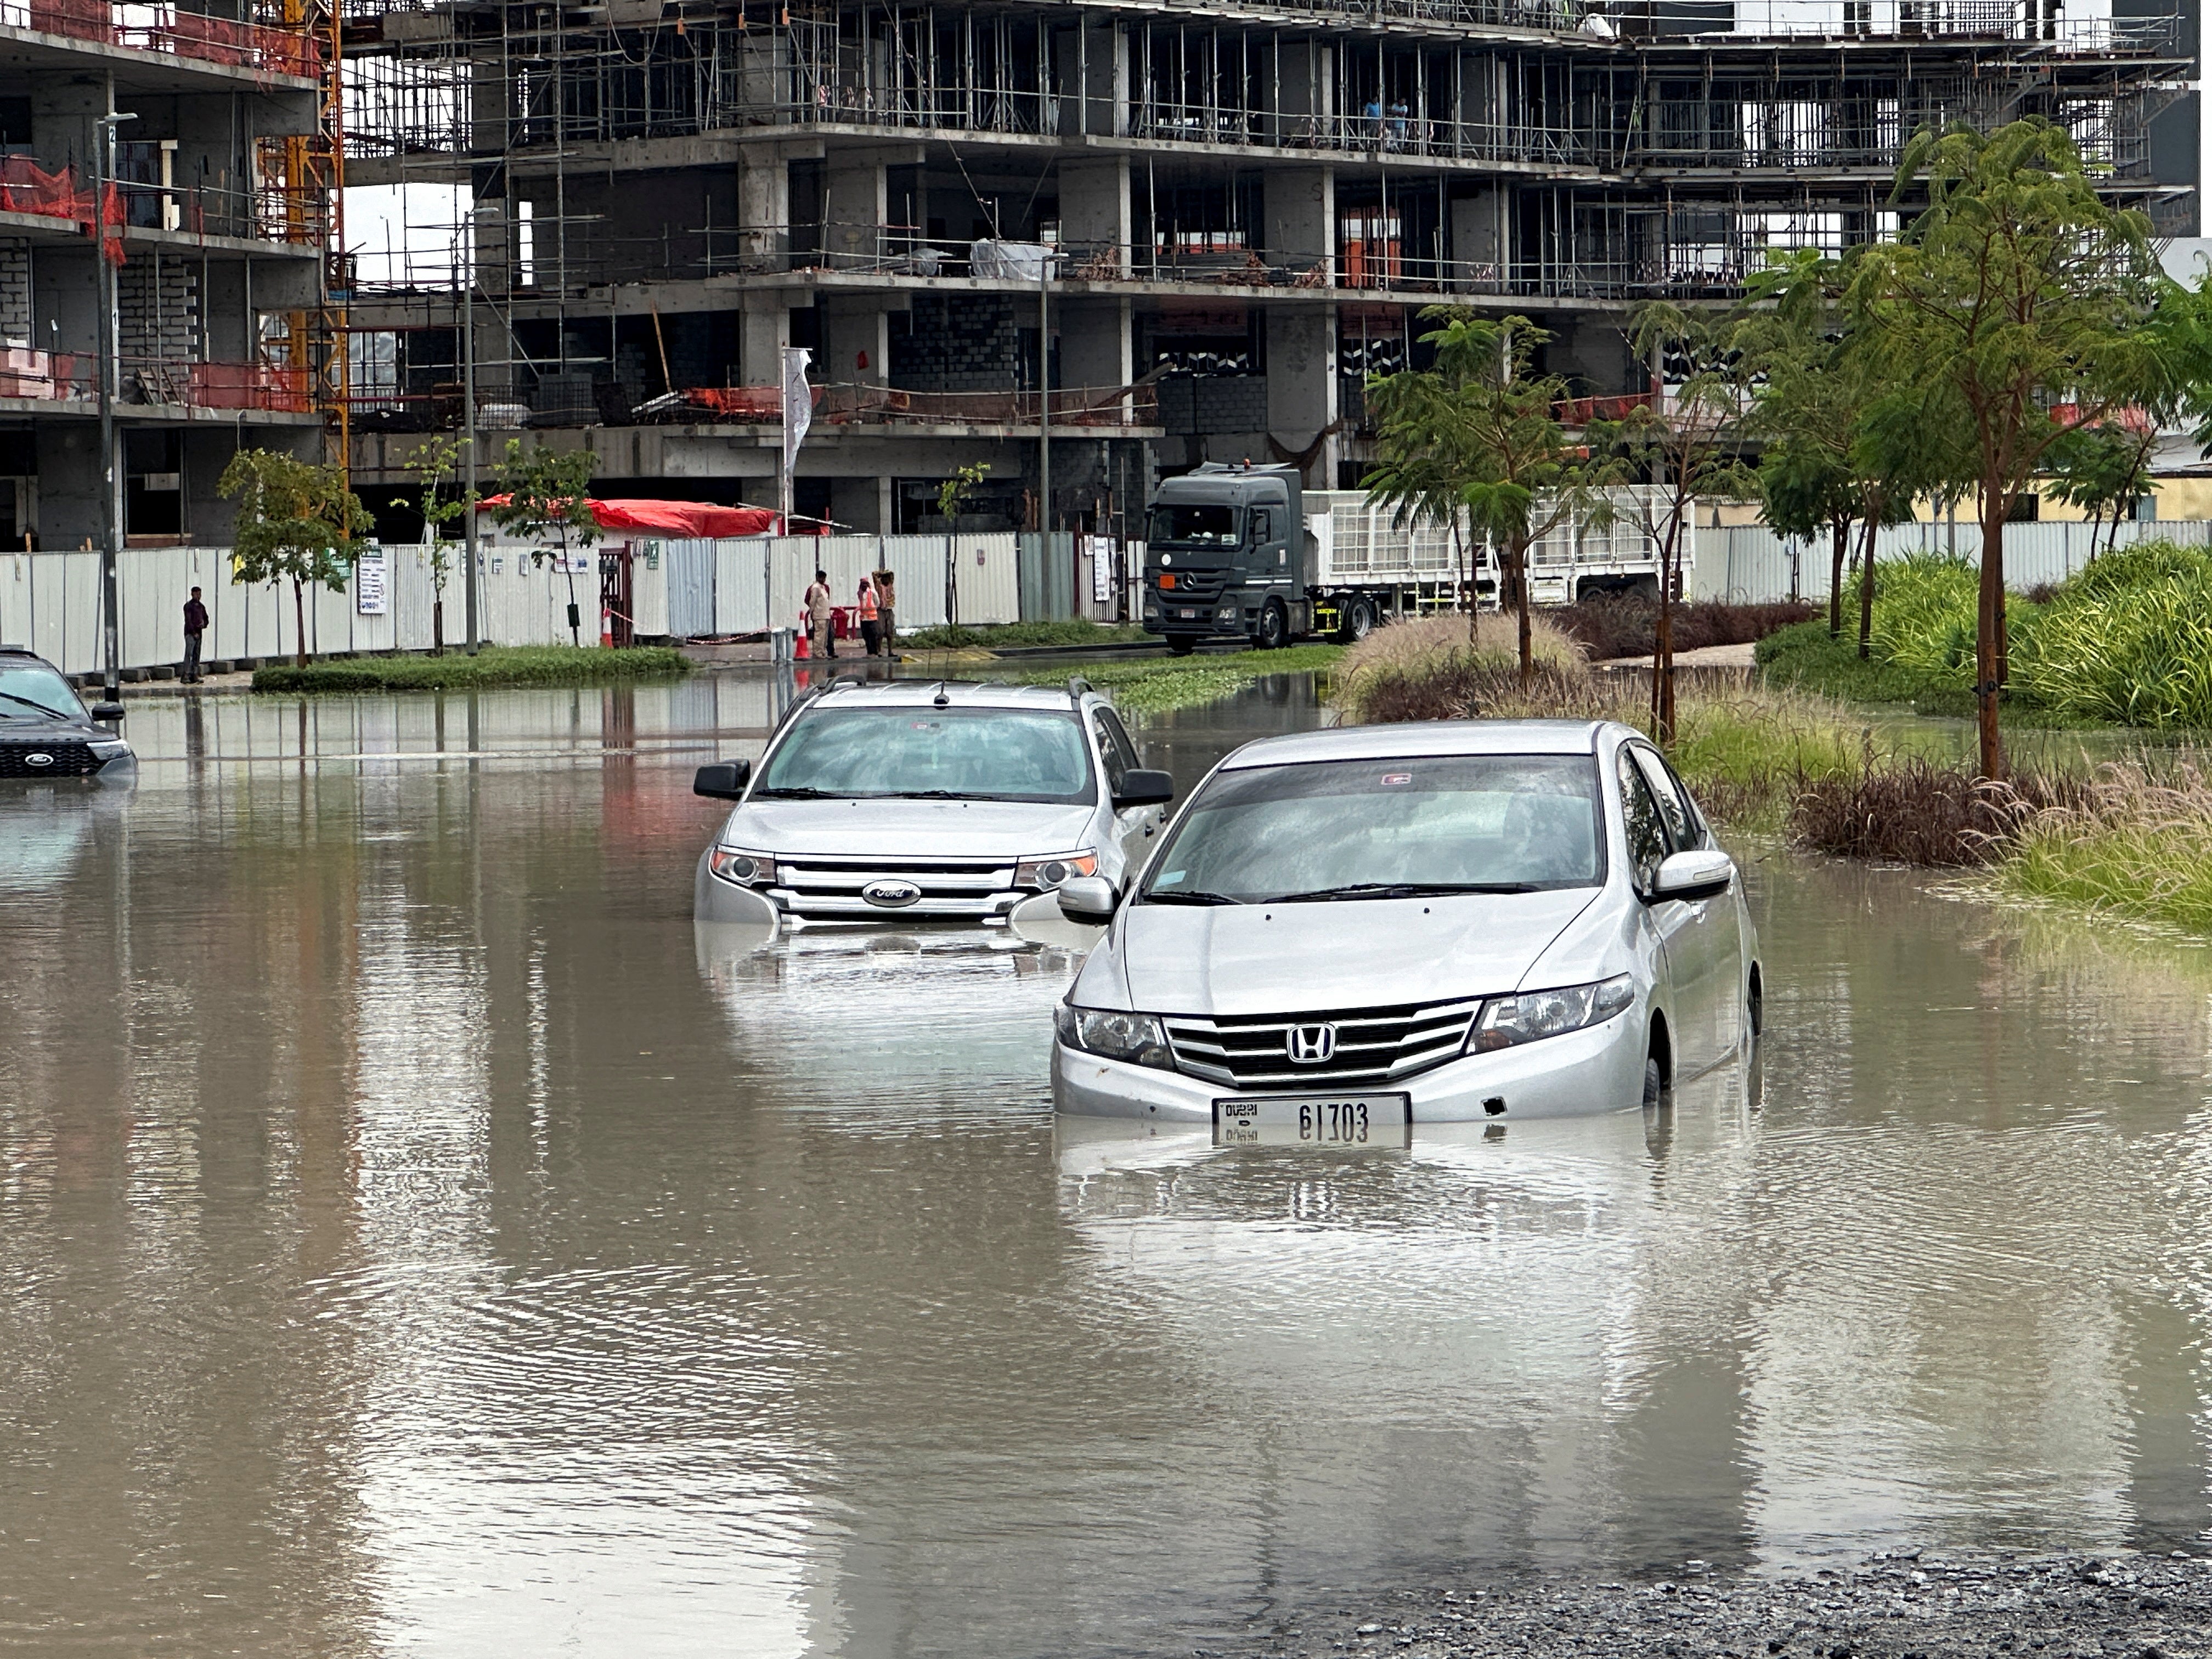 Cars drive through a flooded street